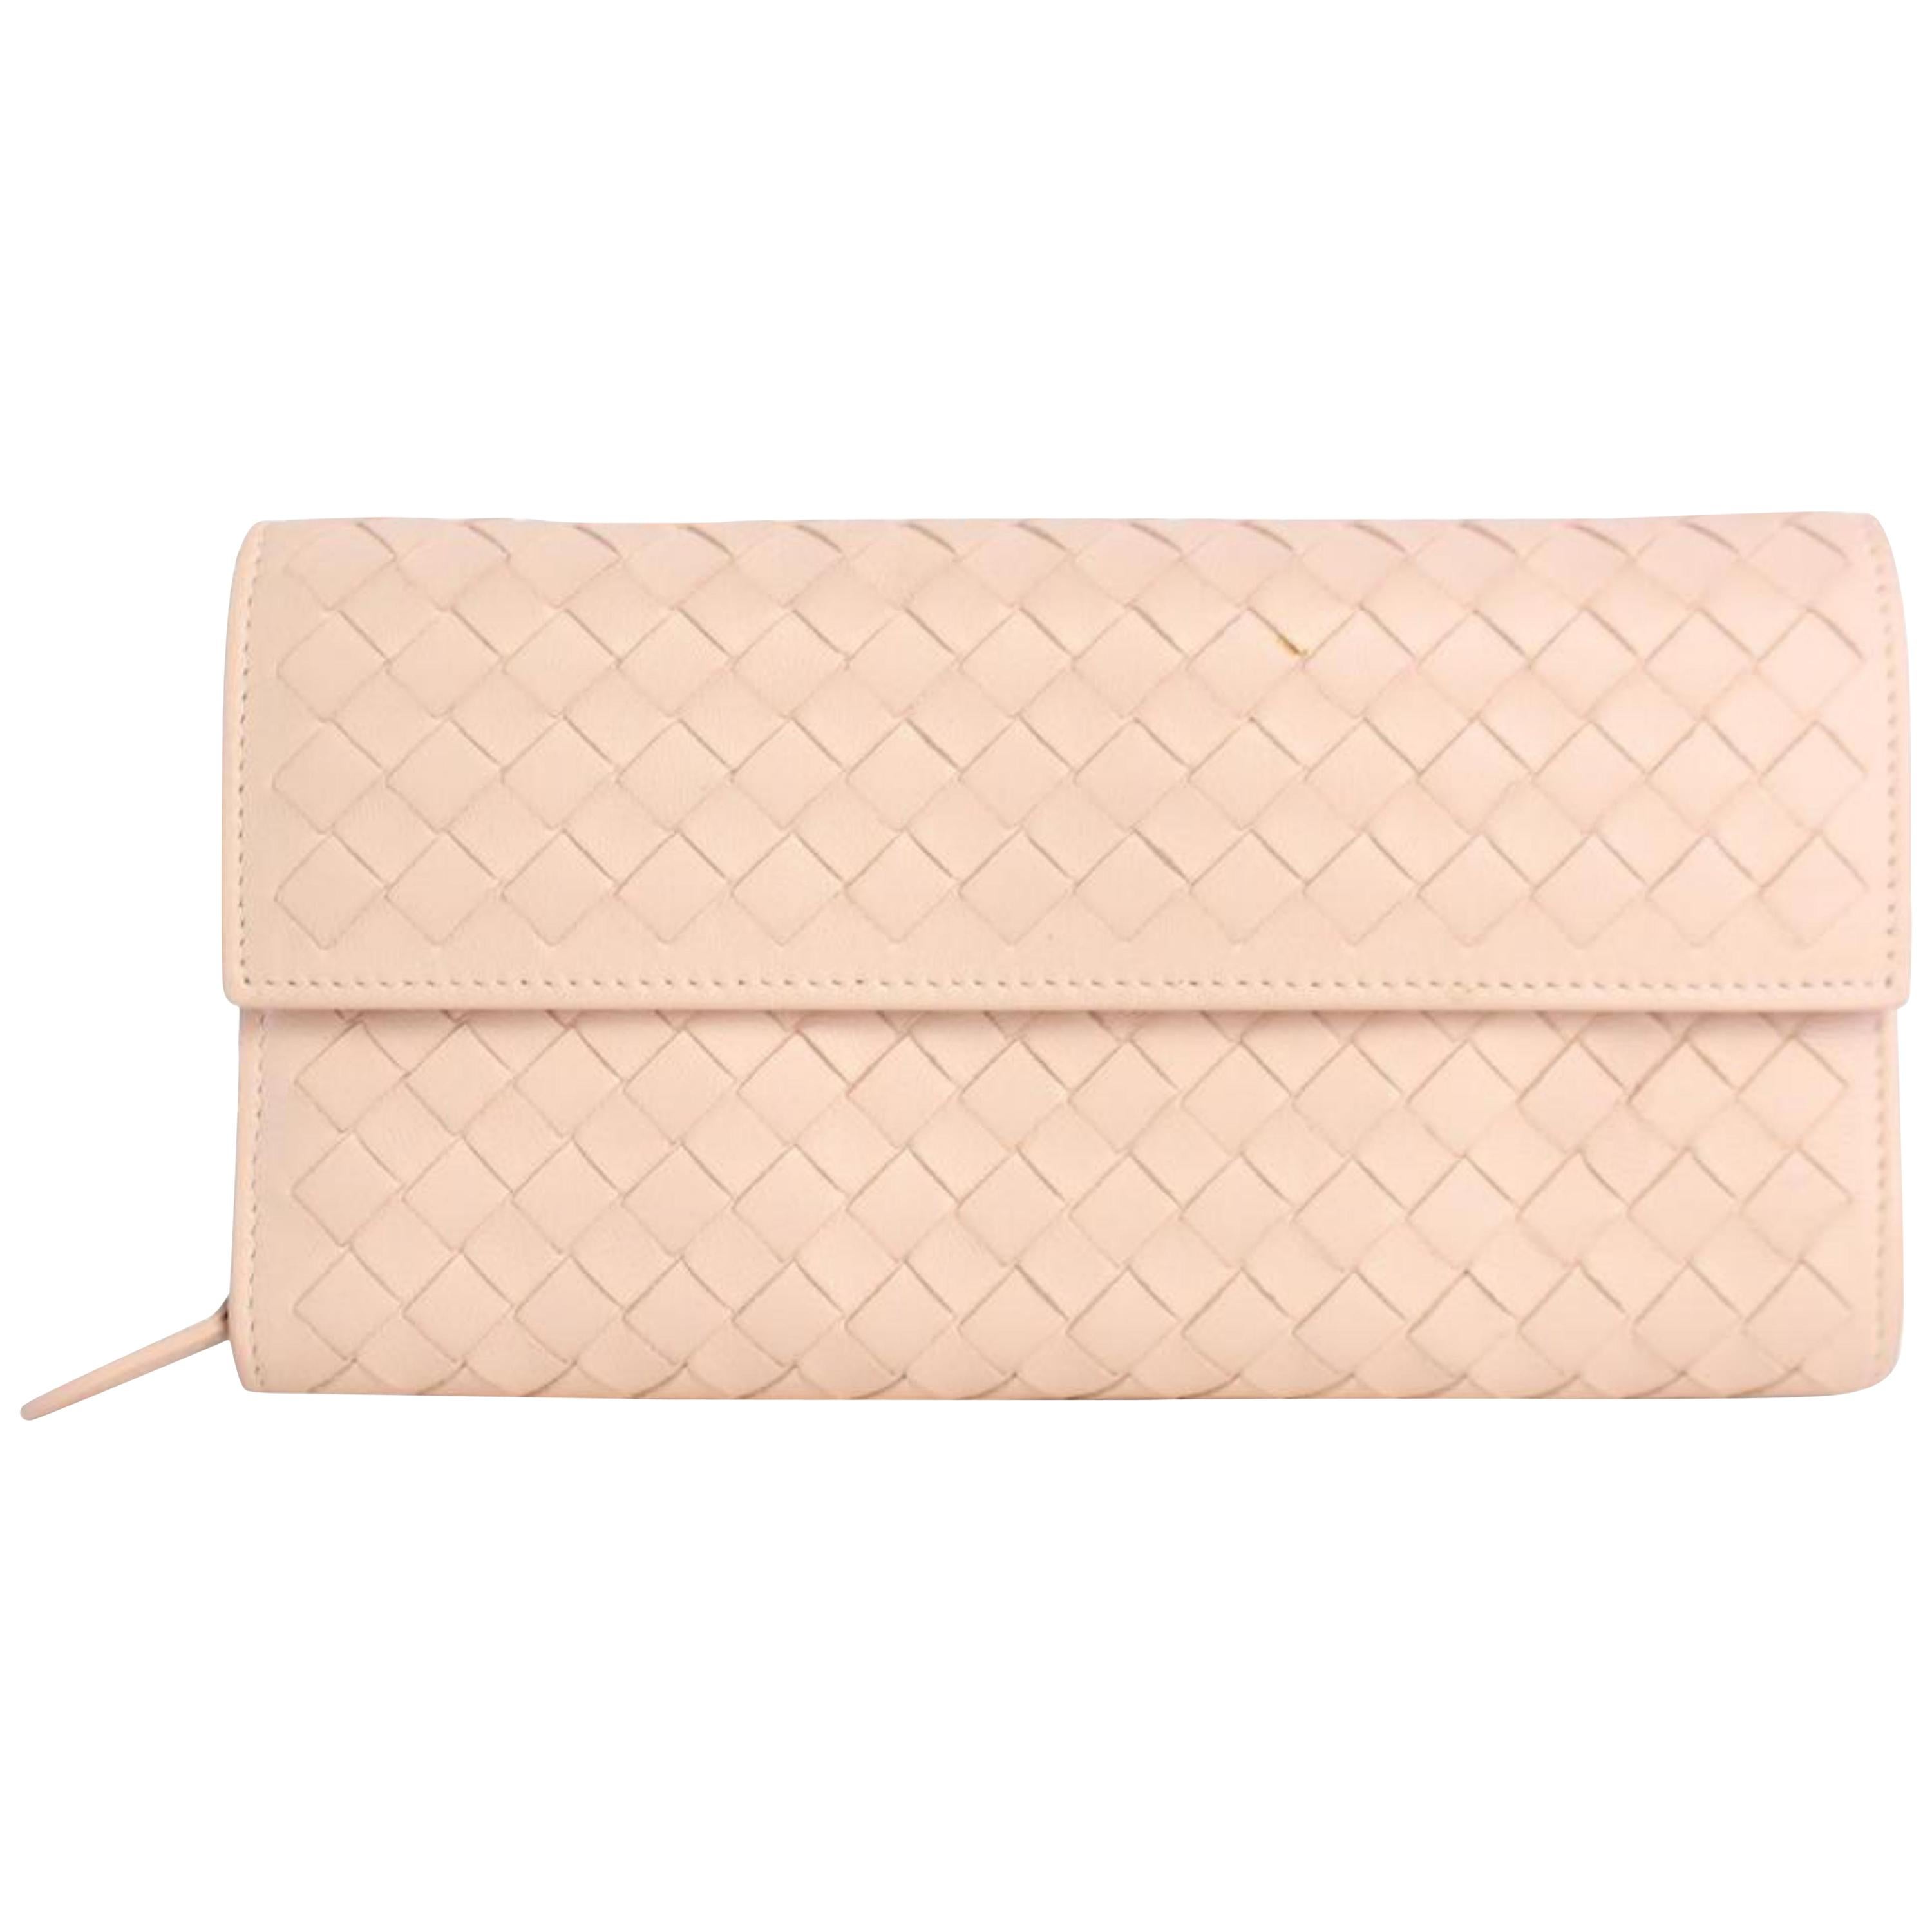 Bottega Veneta Fold-over Flap Wallet 5mz0828 Pink Leather Clutch For Sale